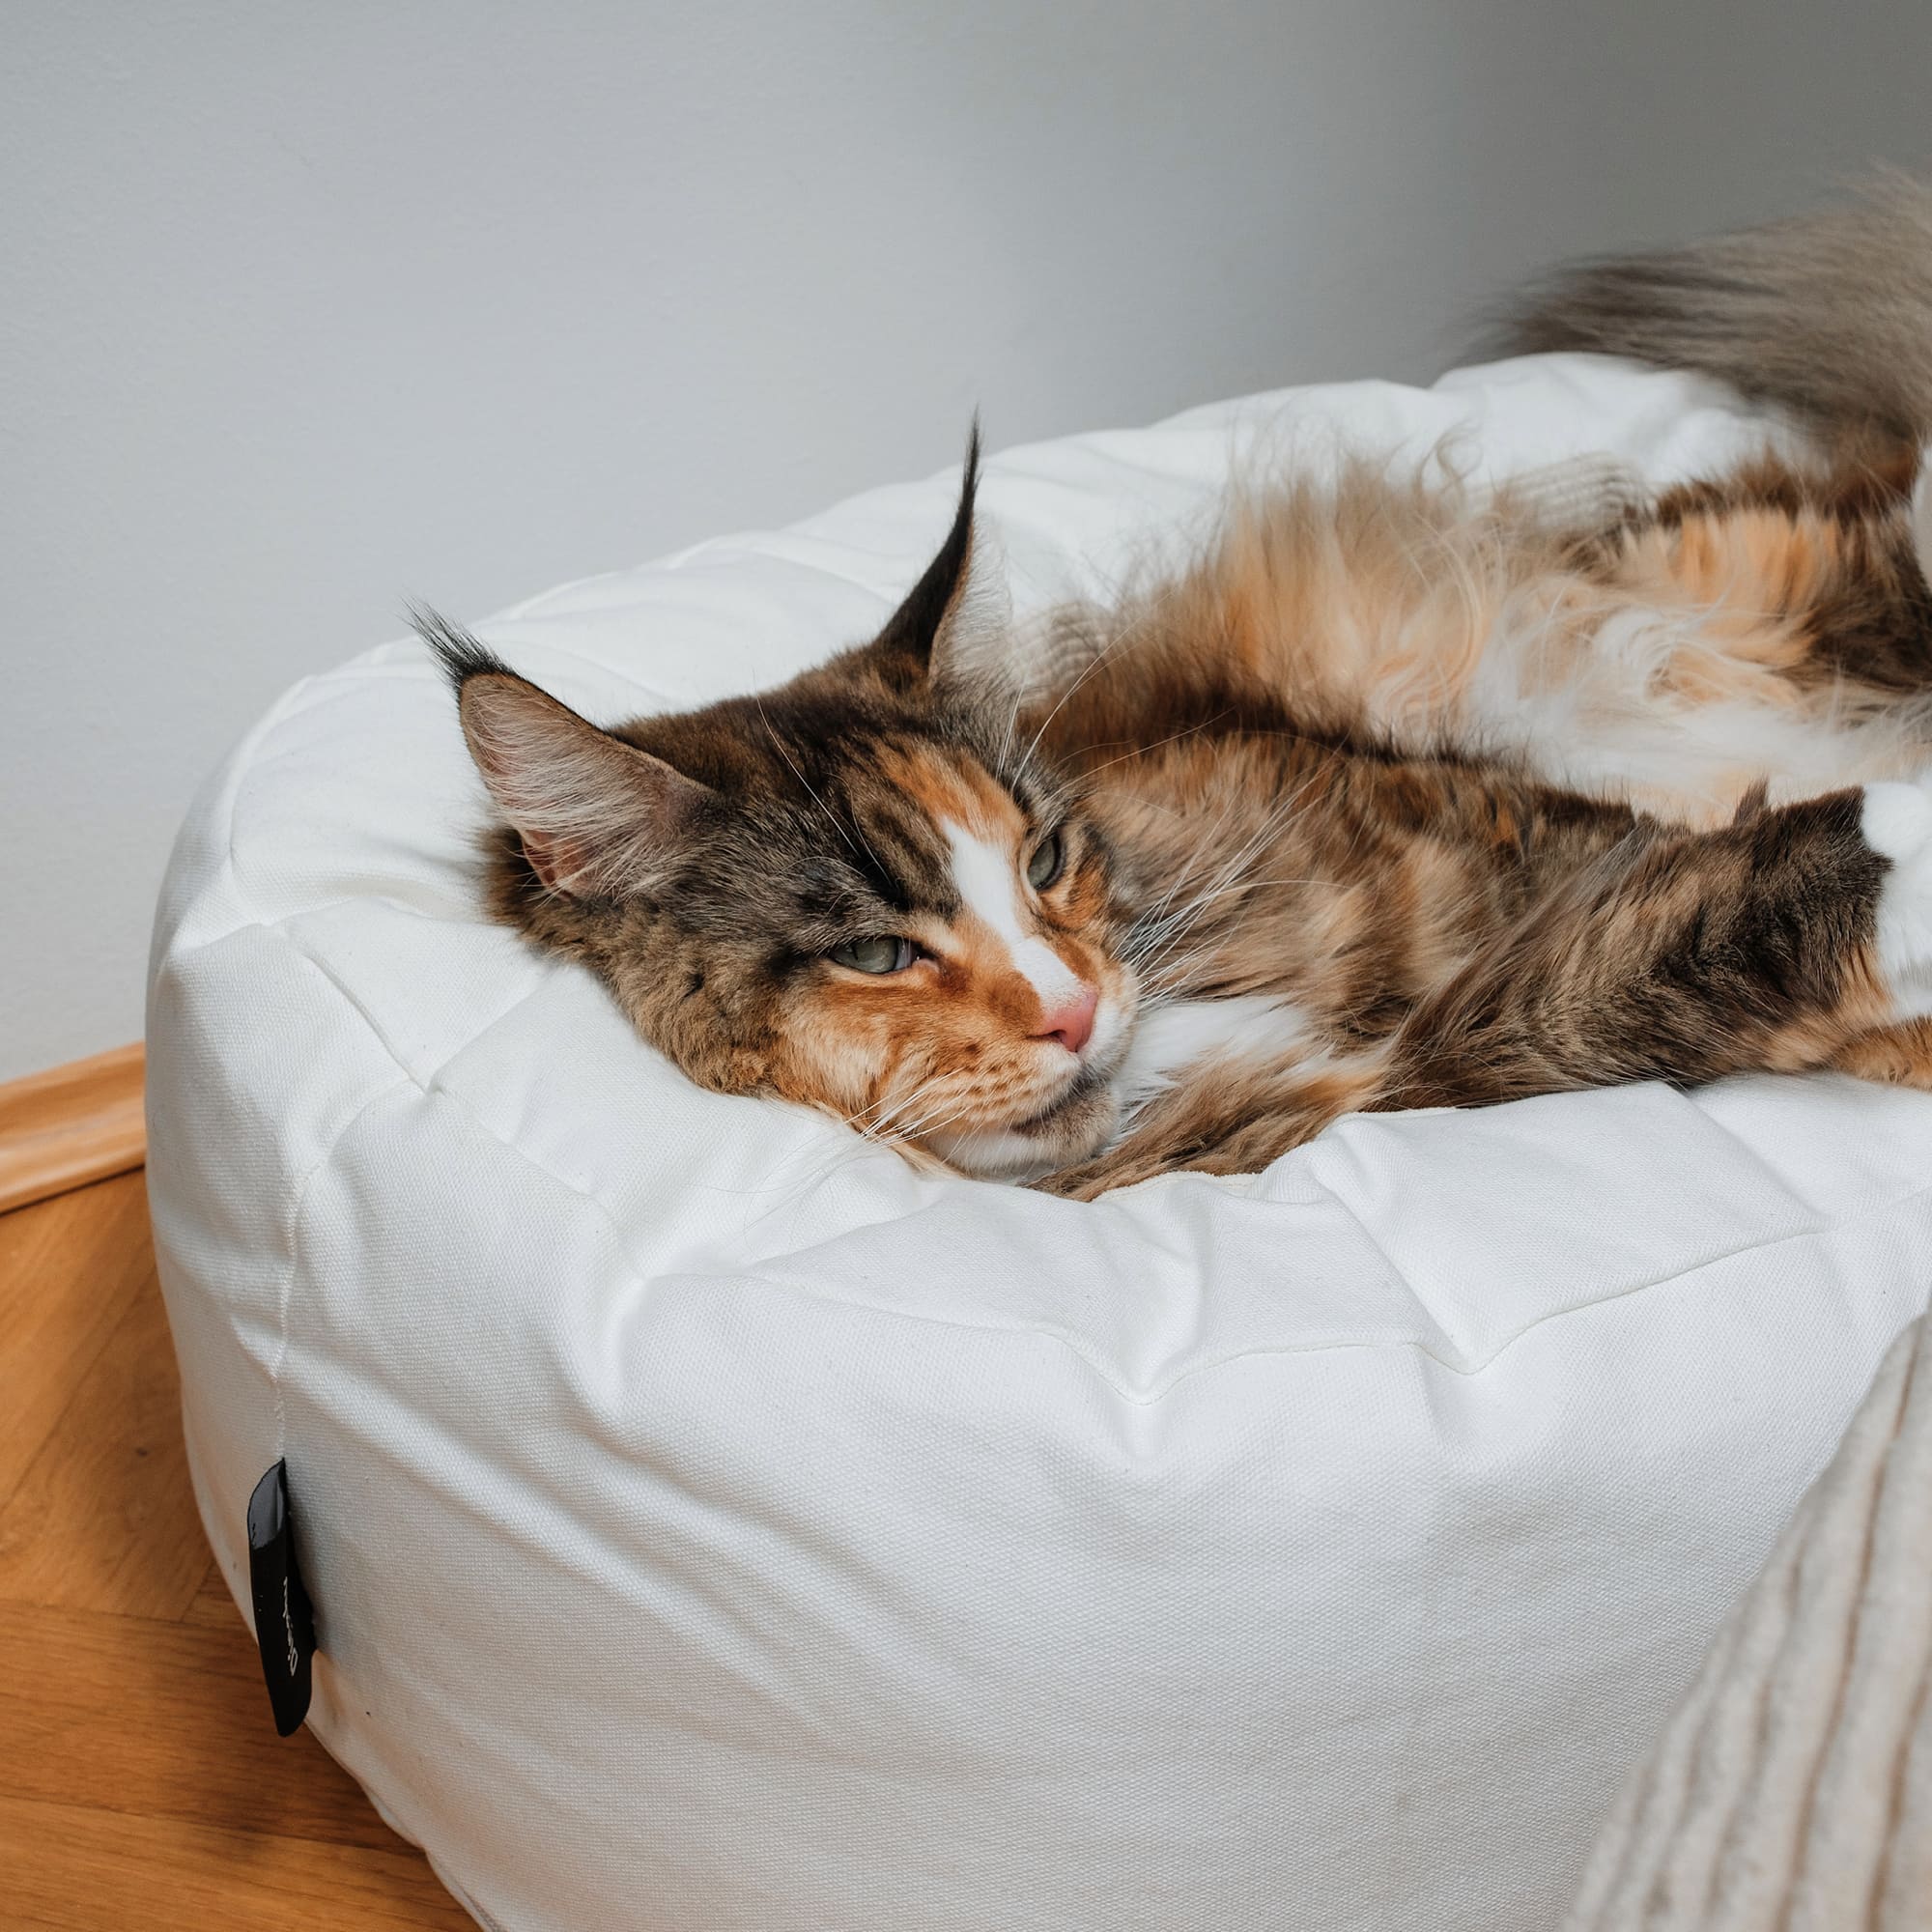 DINGHY cat bed